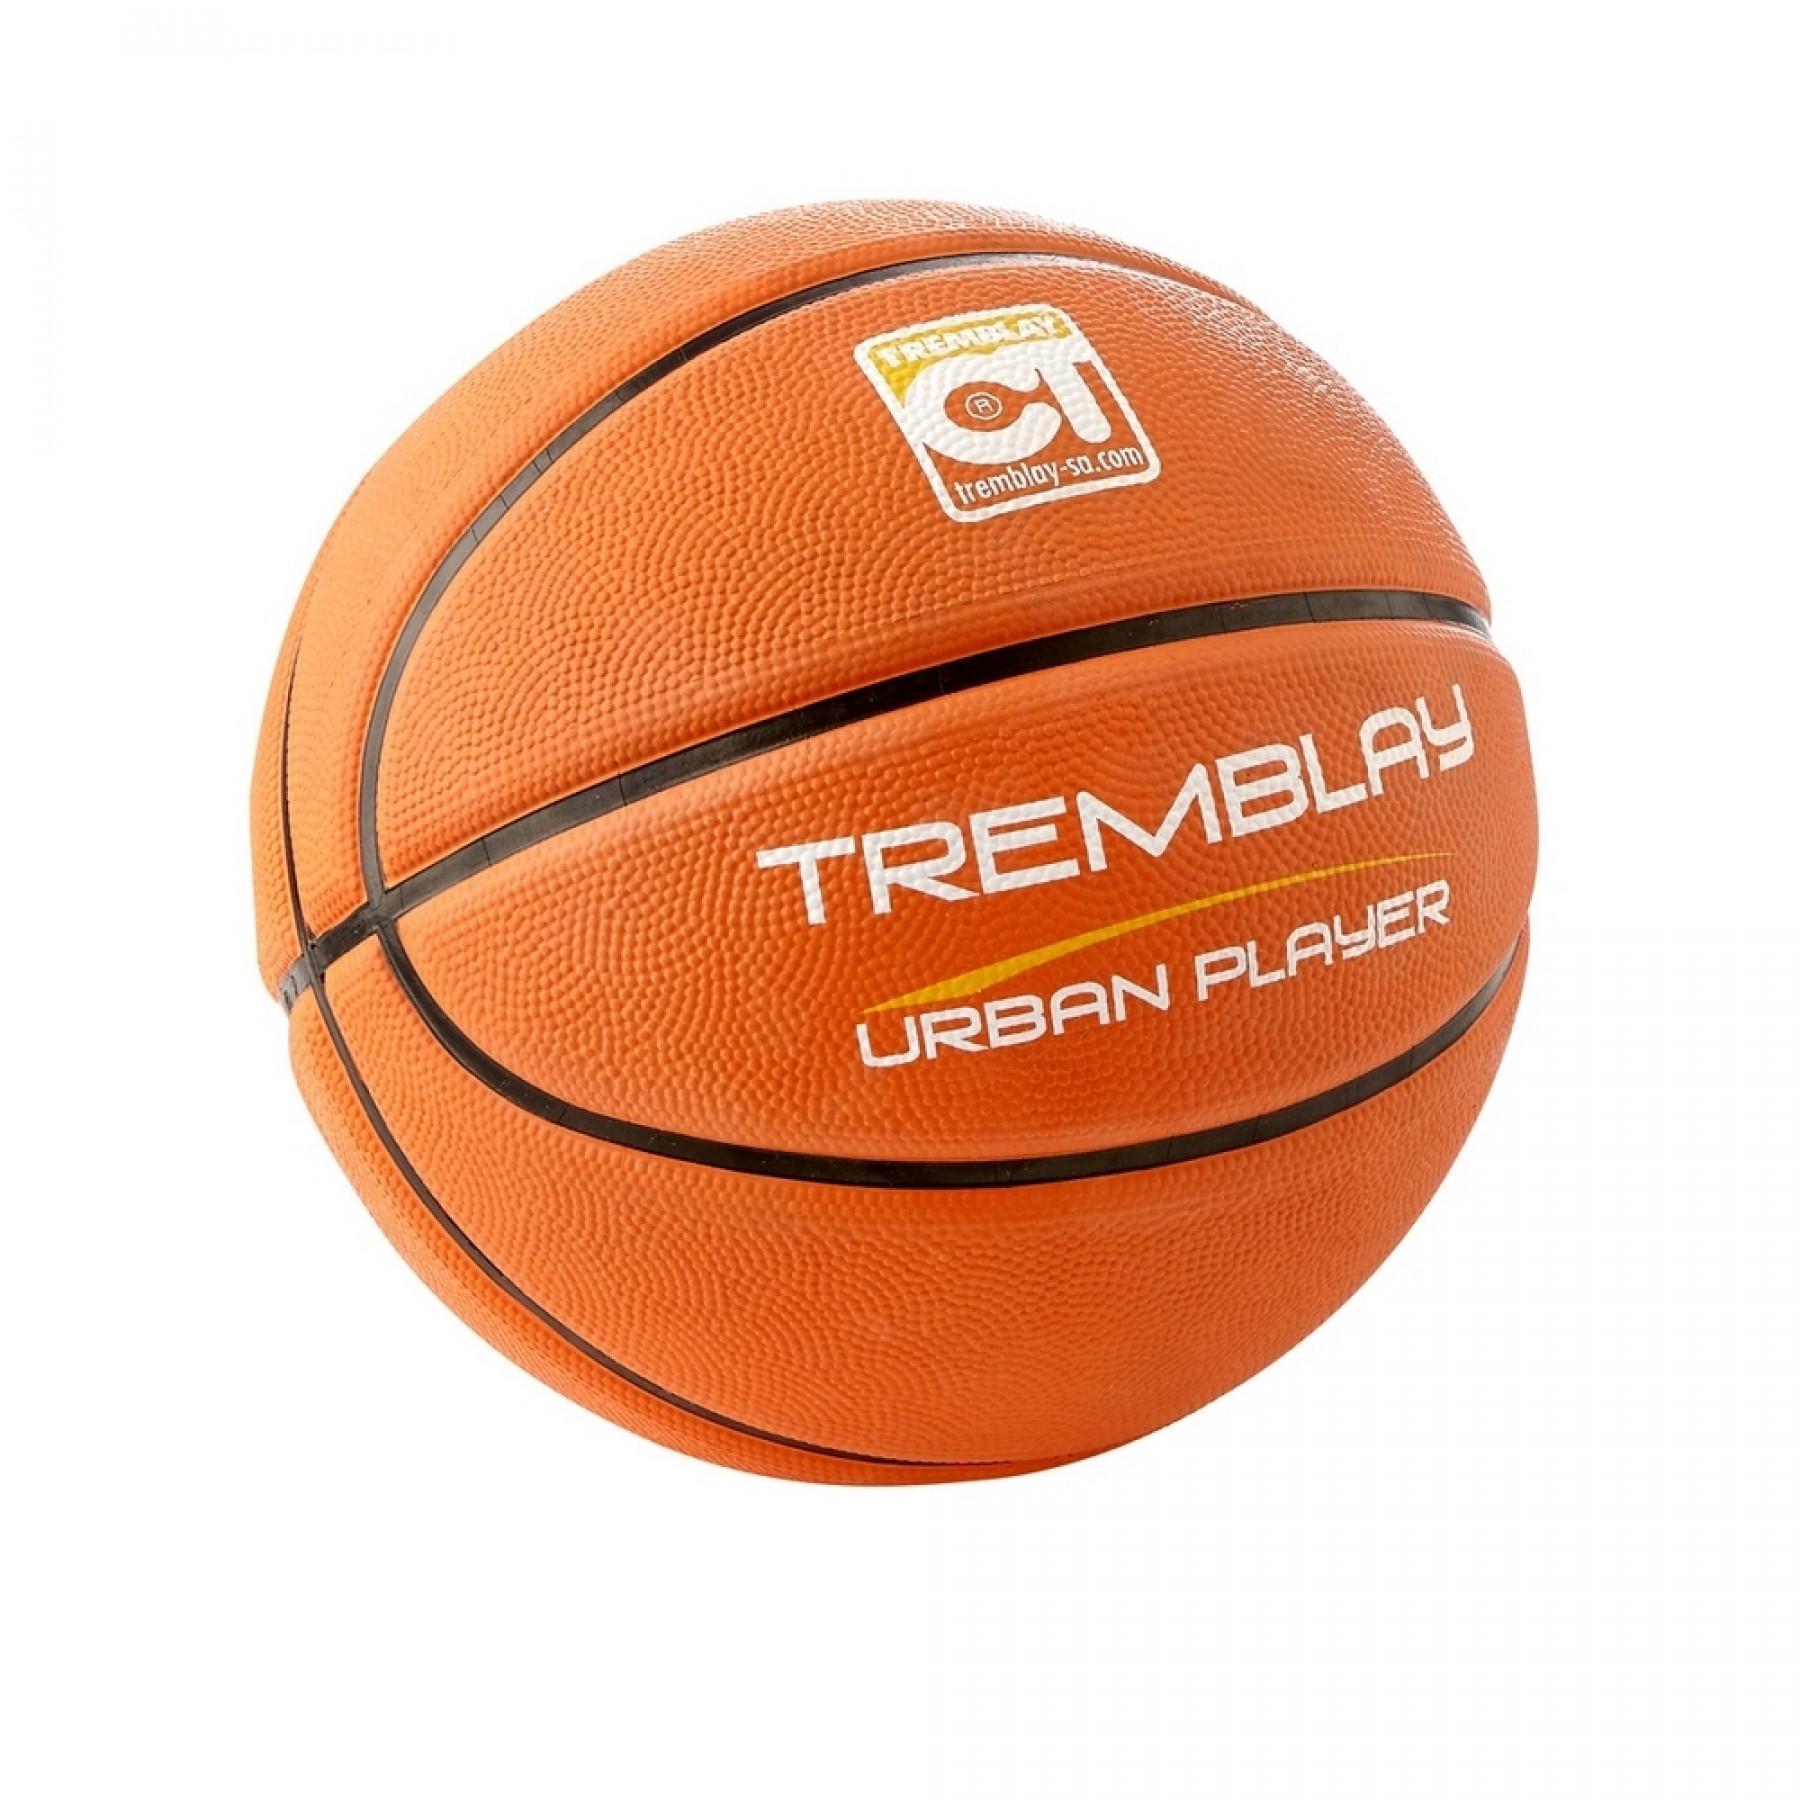 Balón Tremblay training celular